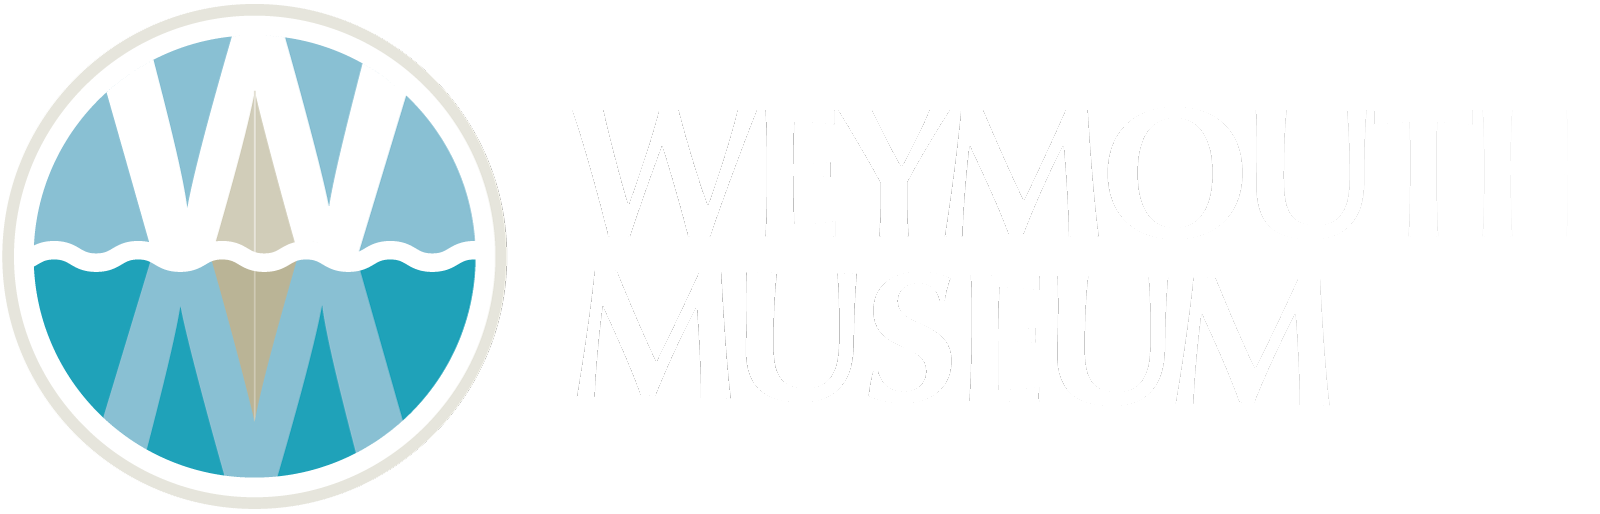 Weymouth Museum